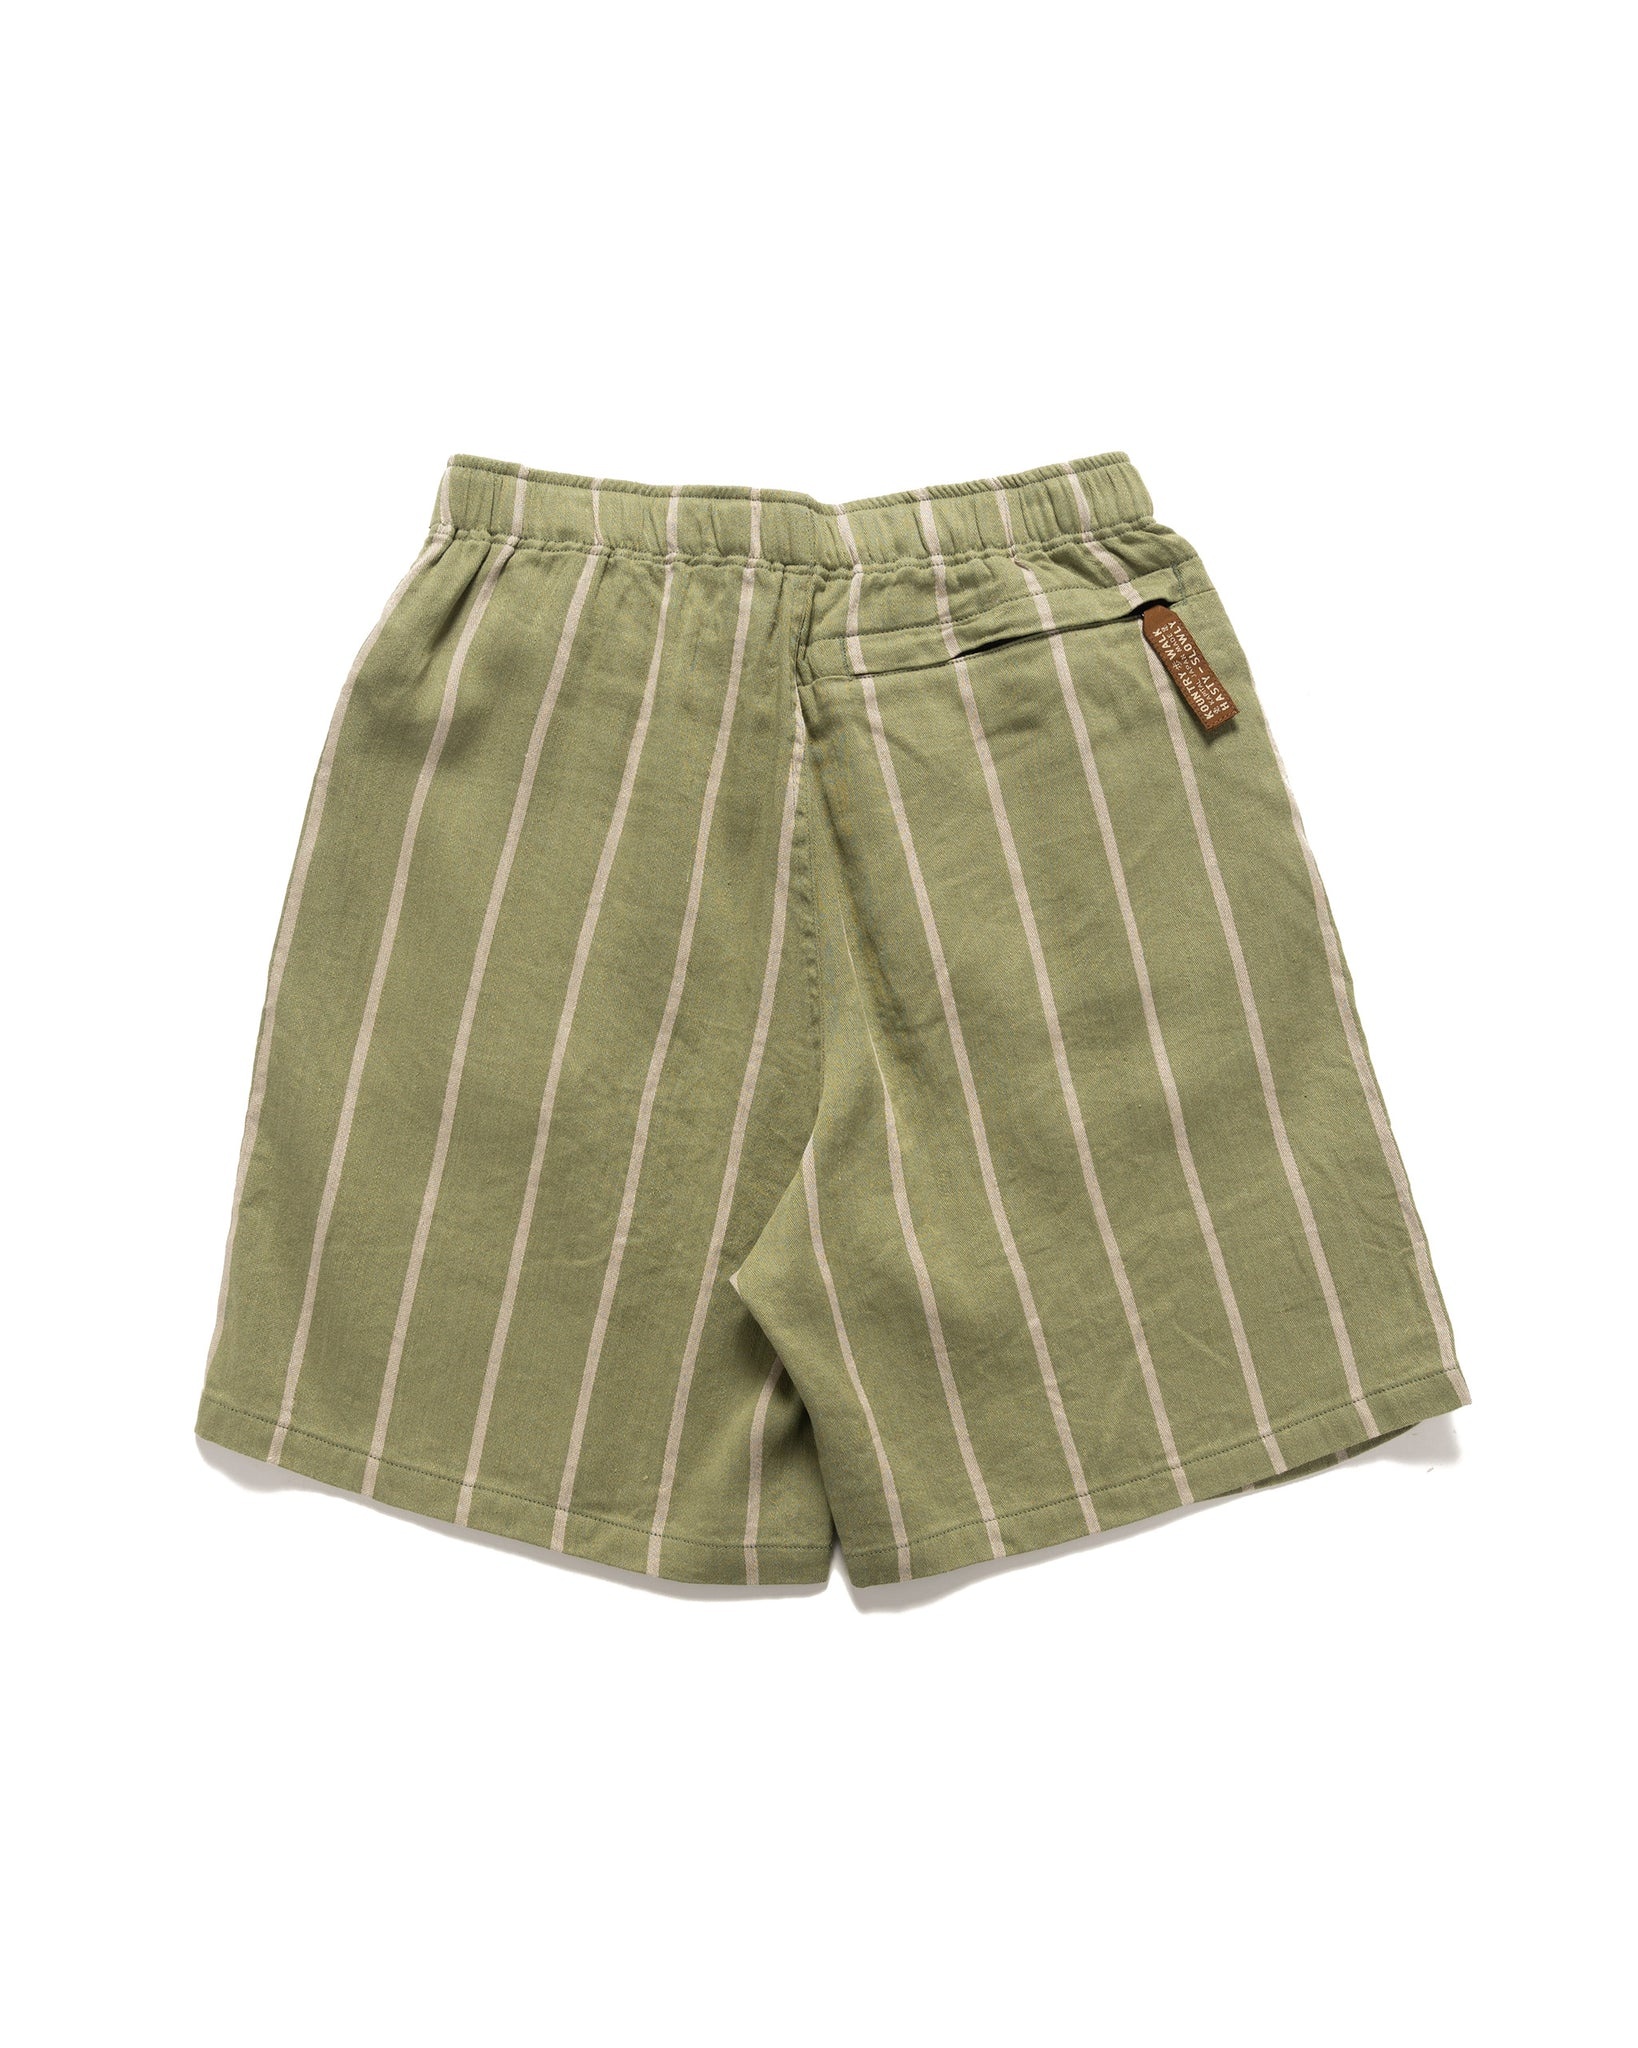 Linen PHILLIES Stripe EASY Shorts Khaki - 5